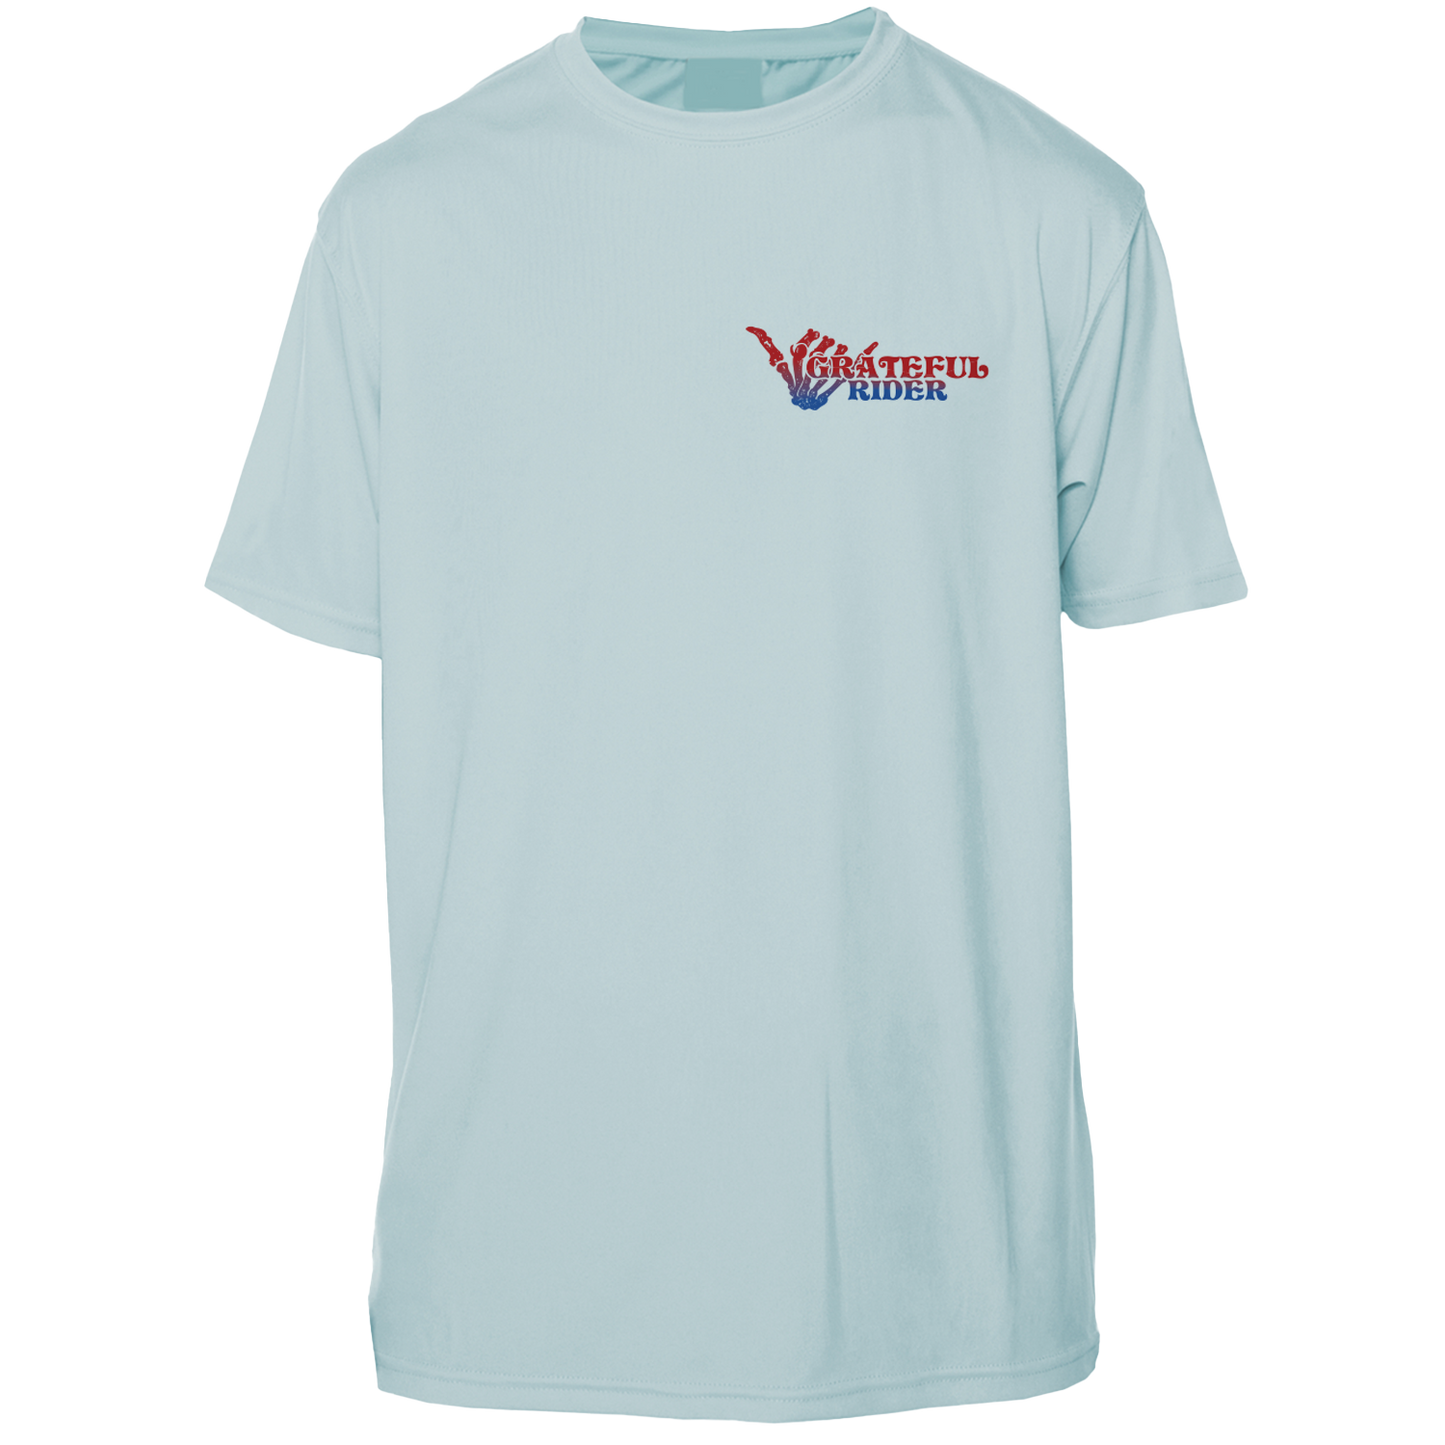 Grateful Rider Whitewater Kayaker Short Sleeve UV Shirt